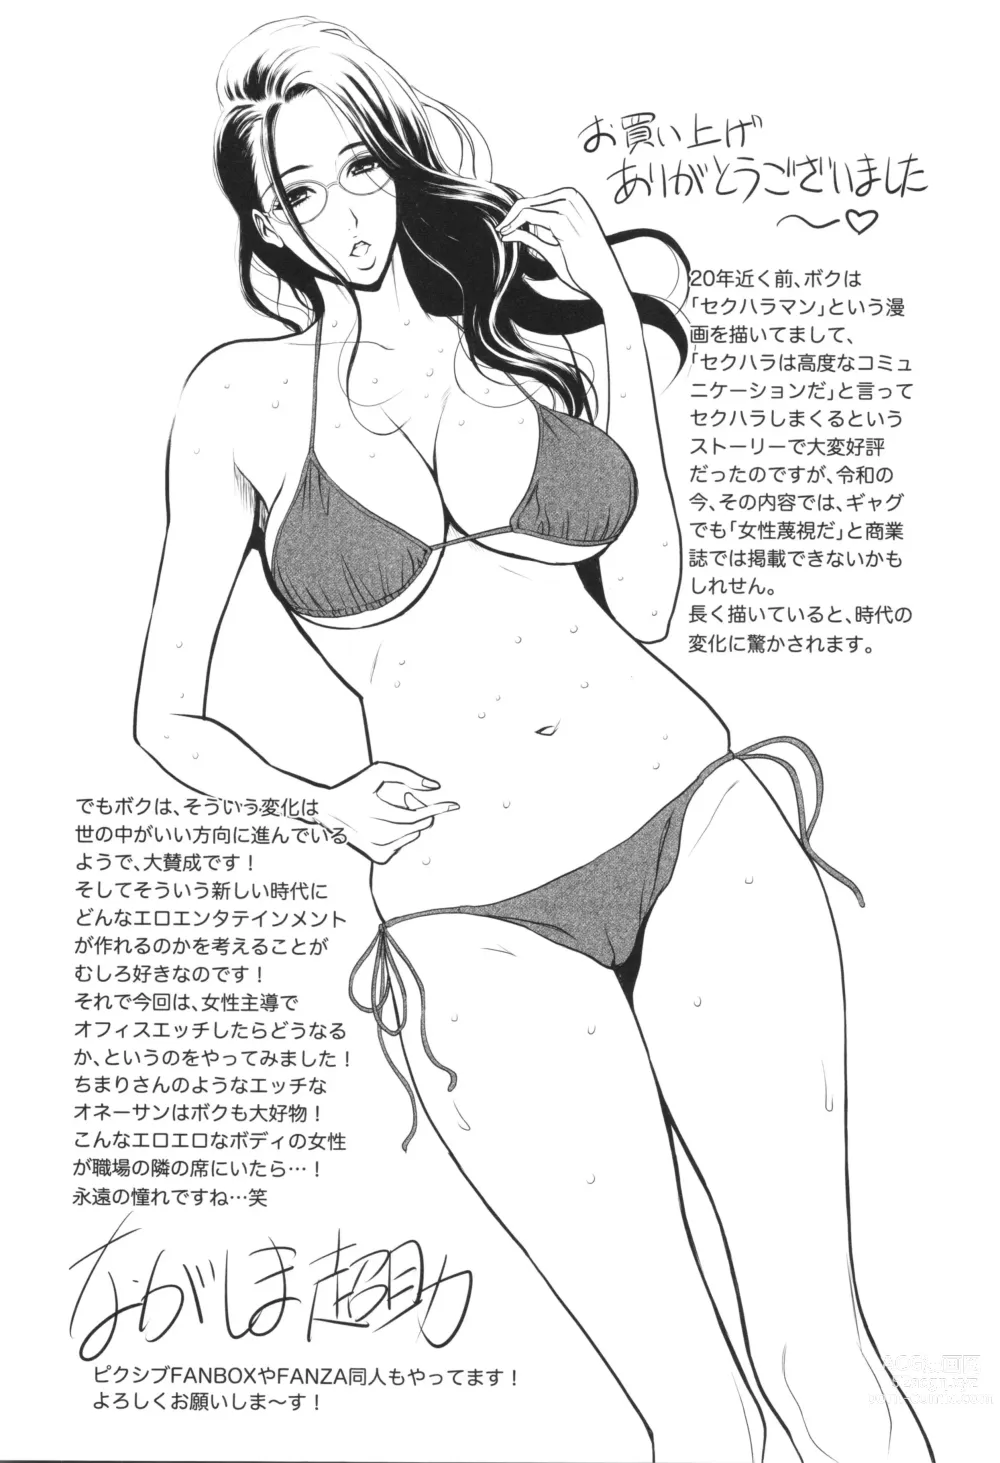 Page 194 of manga Compla Yuruyuru Chimari-san  - Chimaris compliance awareness is very lax.